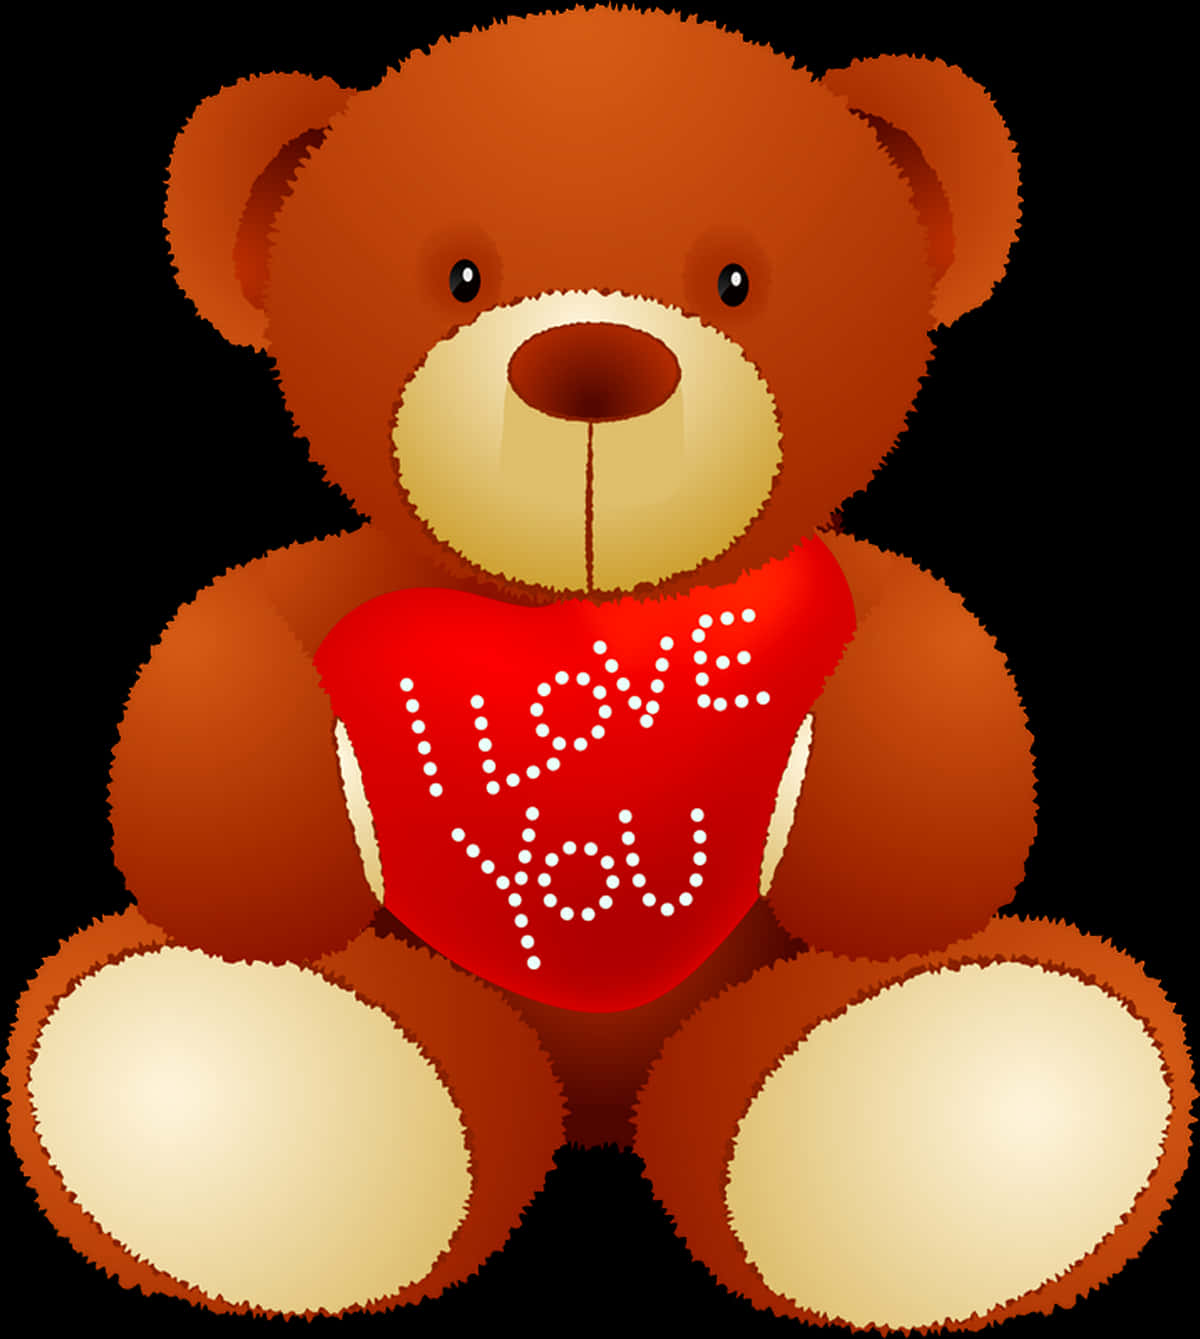 A Teddy Bear Holding A Red Heart